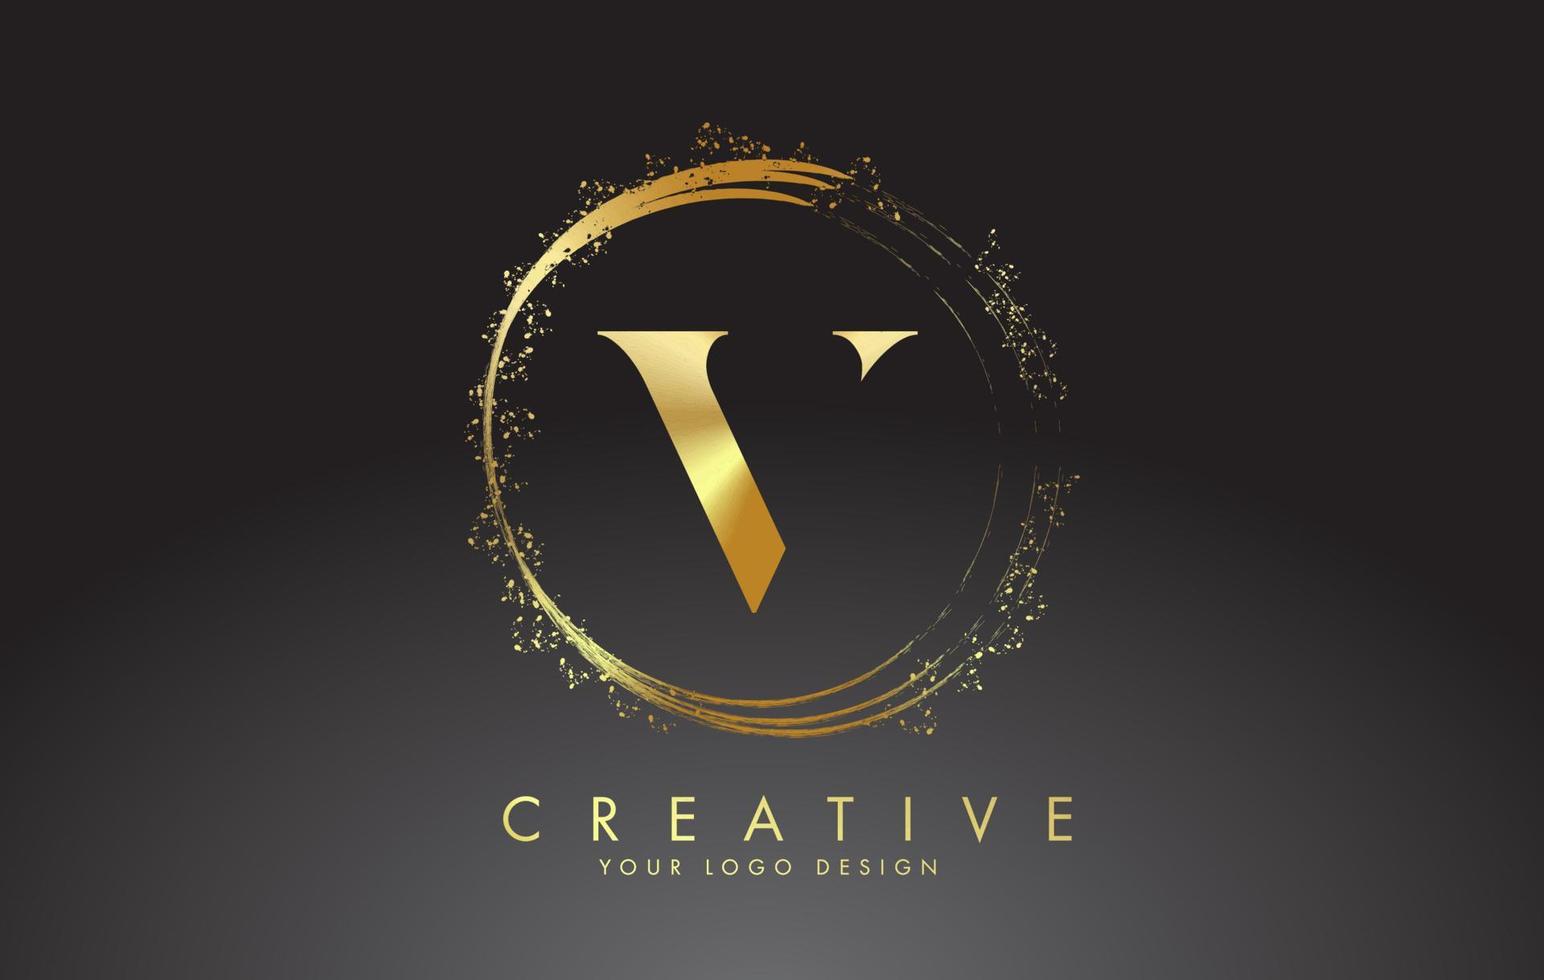 V golden letter logo with golden sparkling rings and dust glitter on a black background. vector